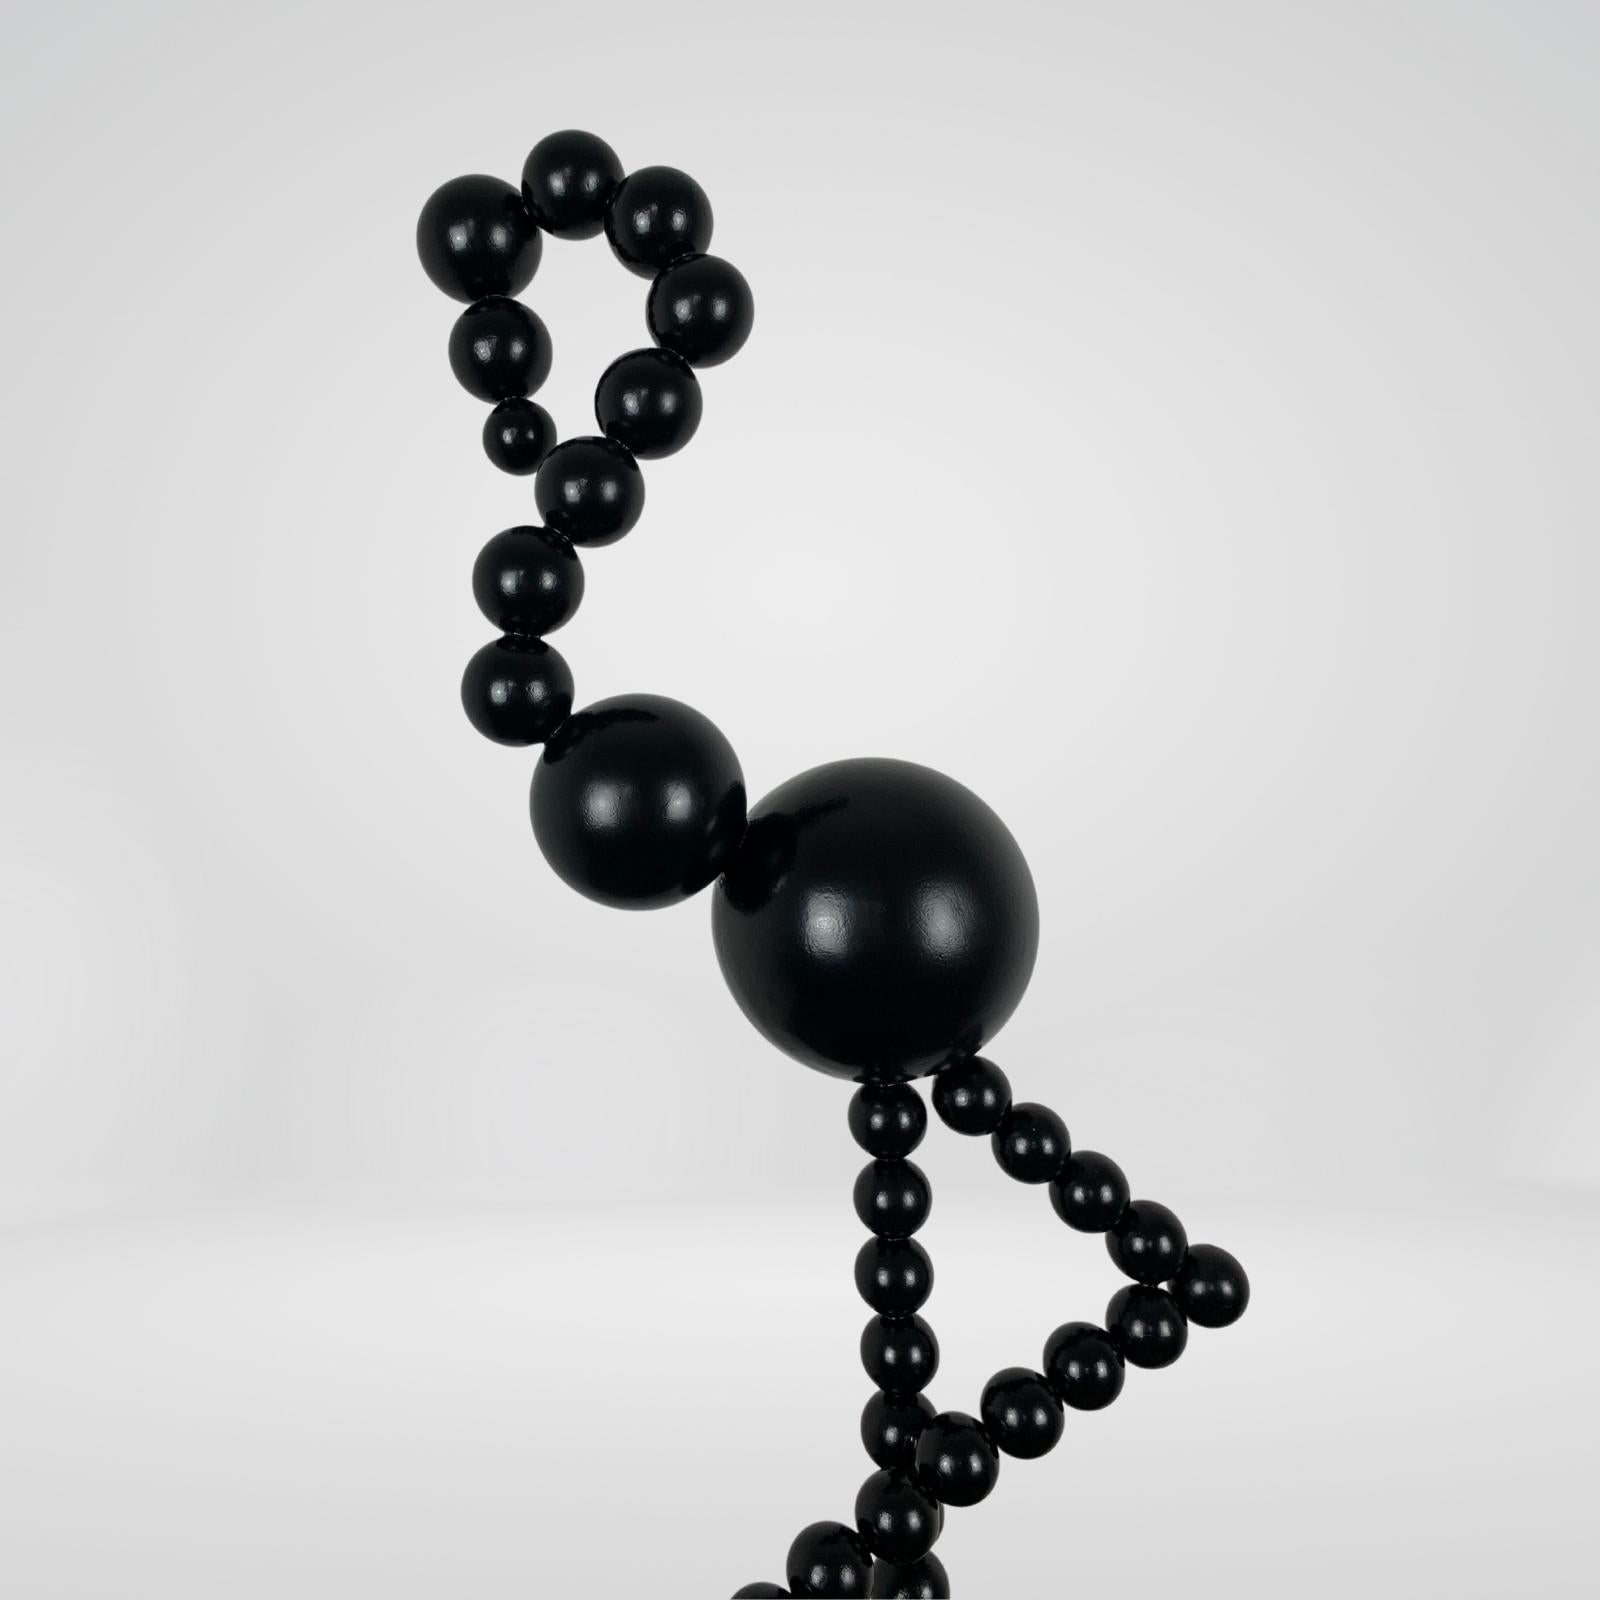 Flamingo Sculpture Black Steel Minimalist Abstract 8